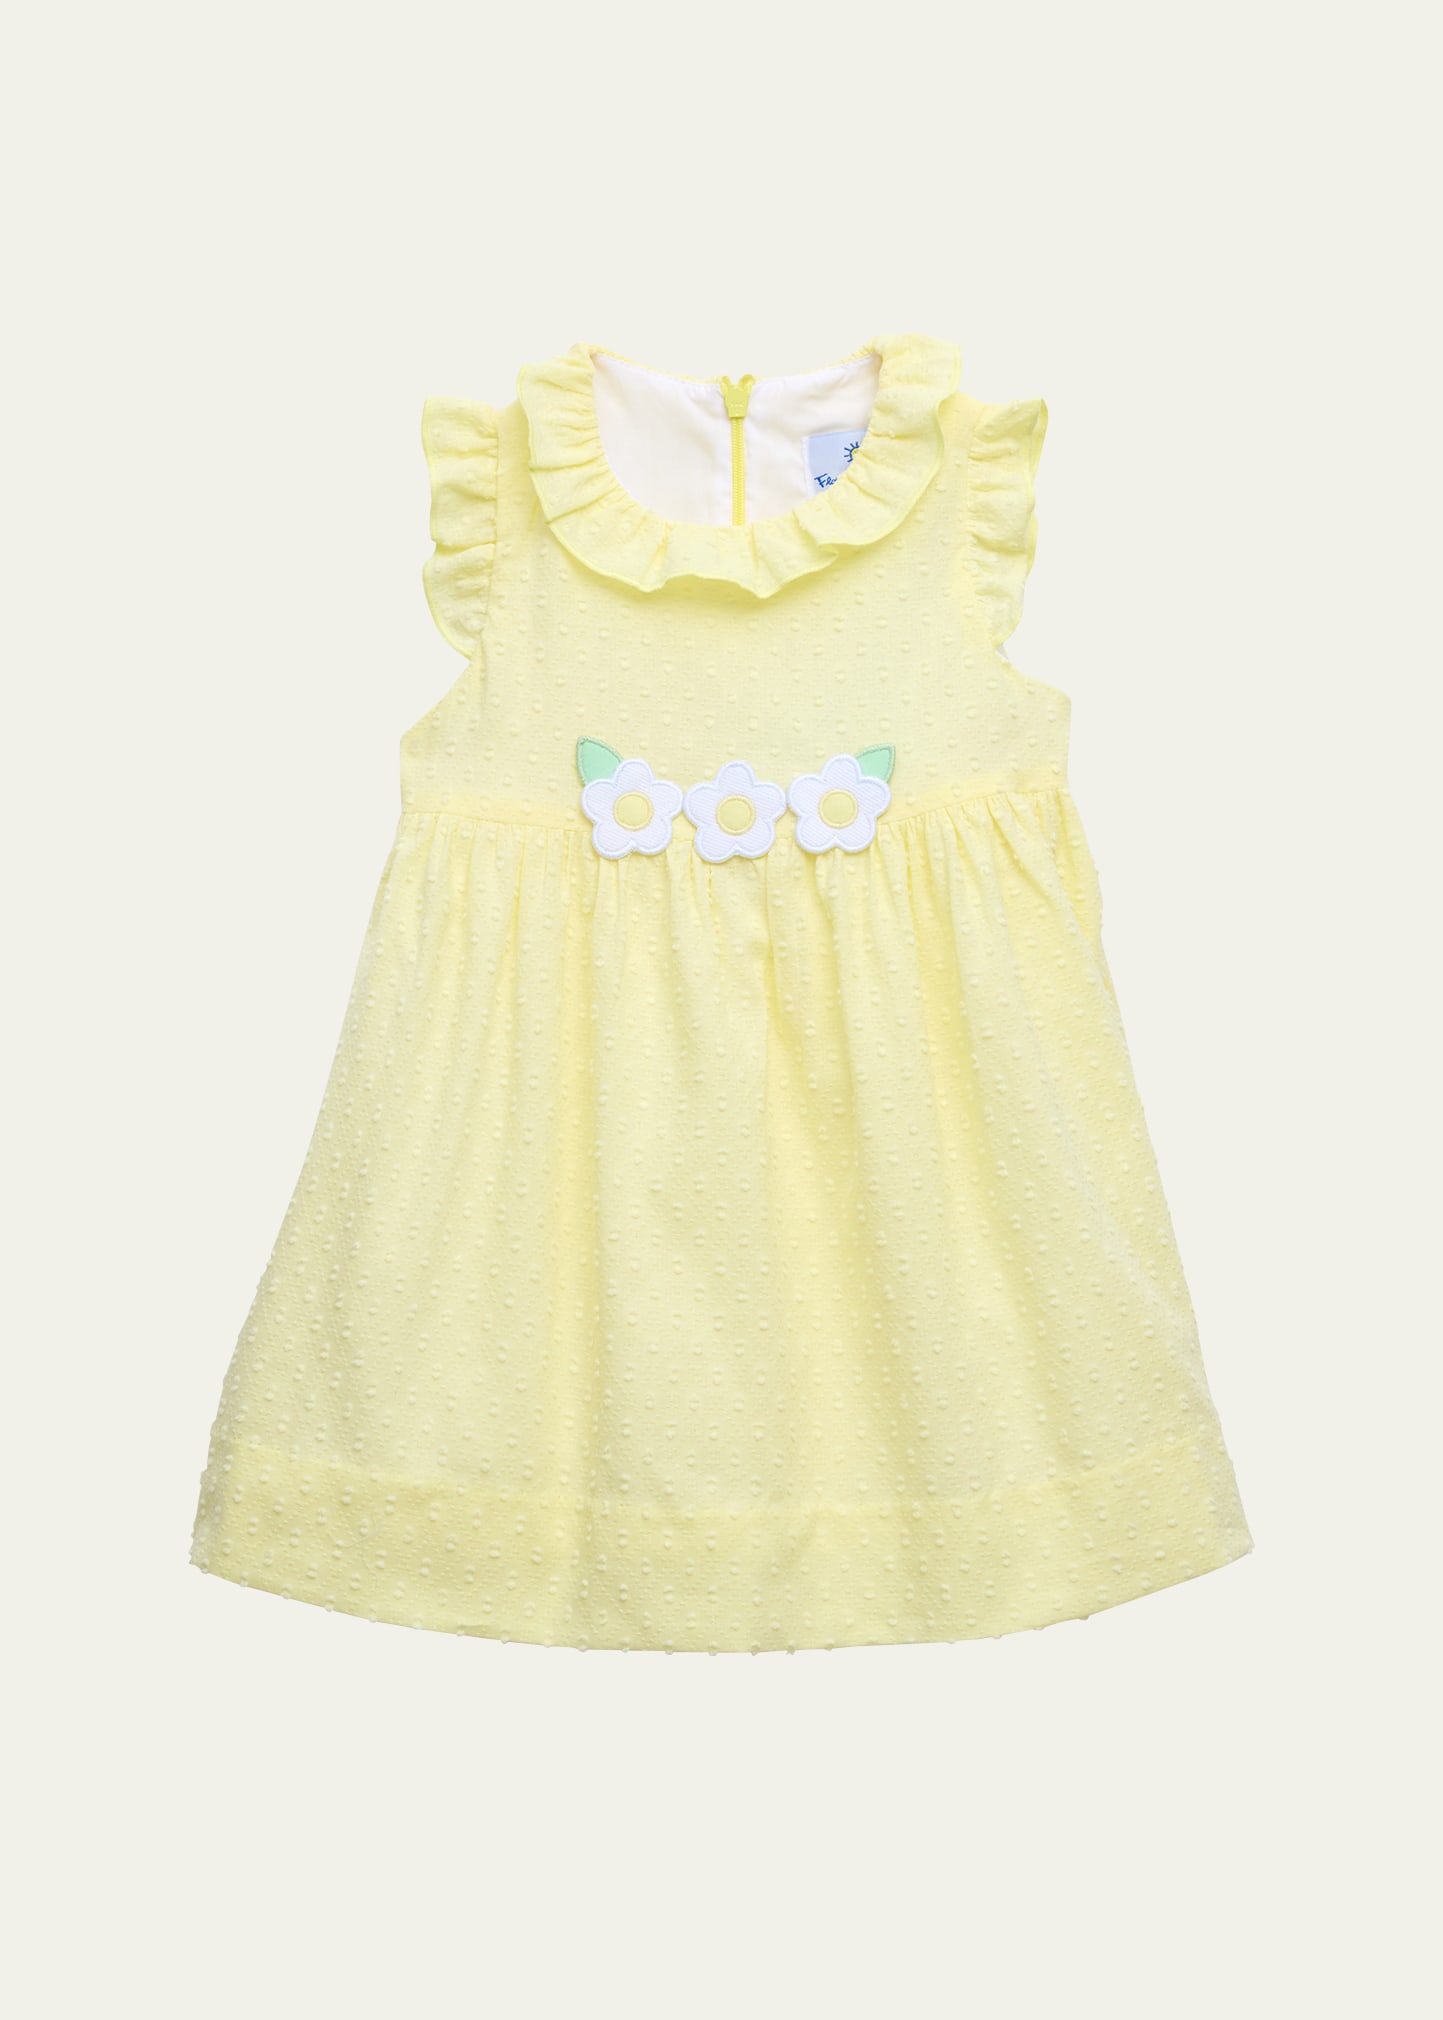 Florence Eiseman Kids' Girl's Yellow Dress With Flowers